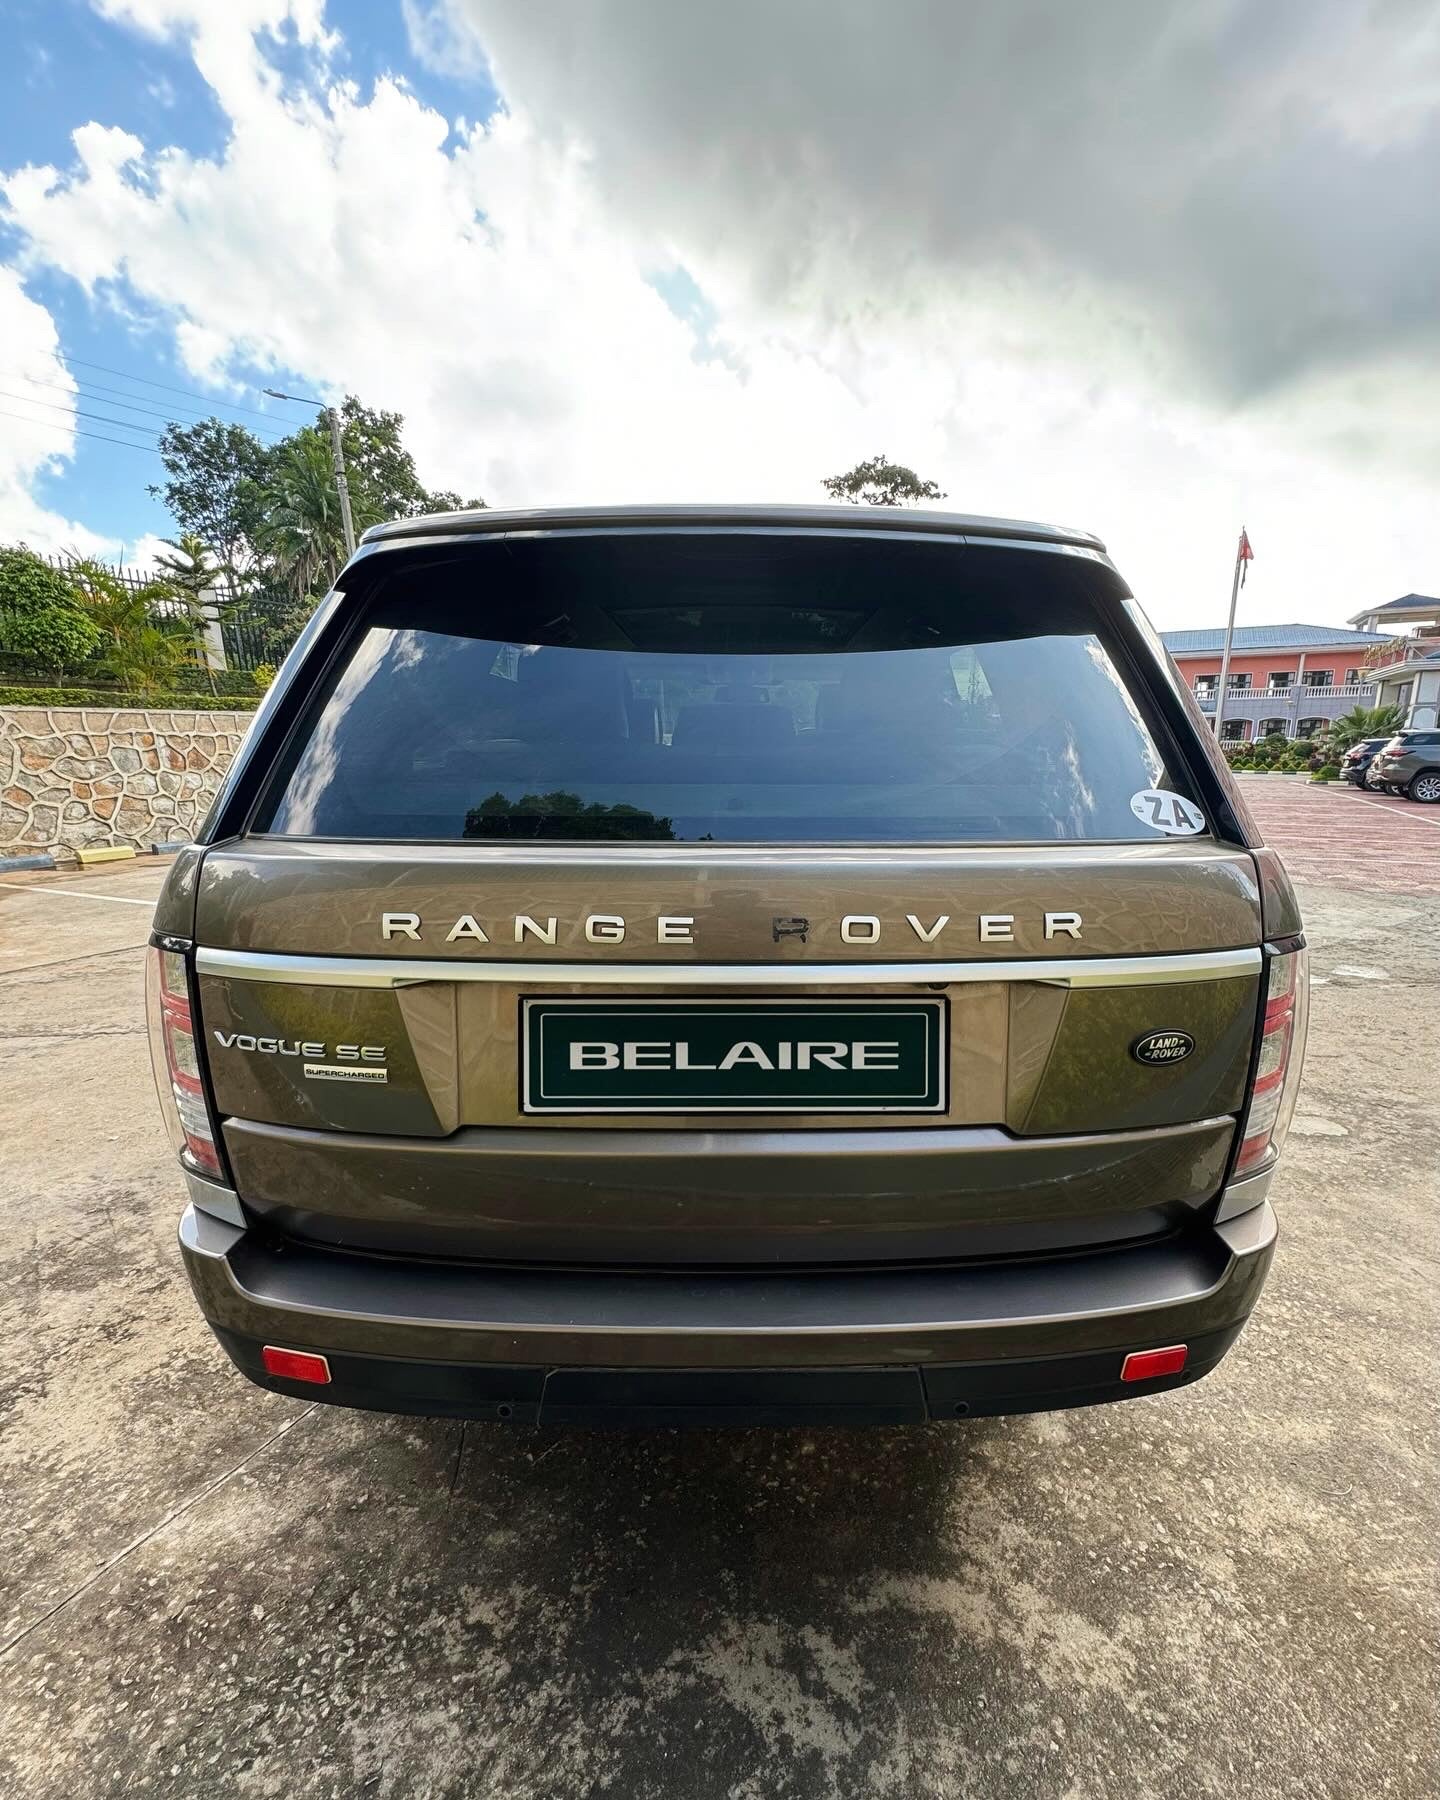 2016 Range Rover Vogue SE (Supercharged)